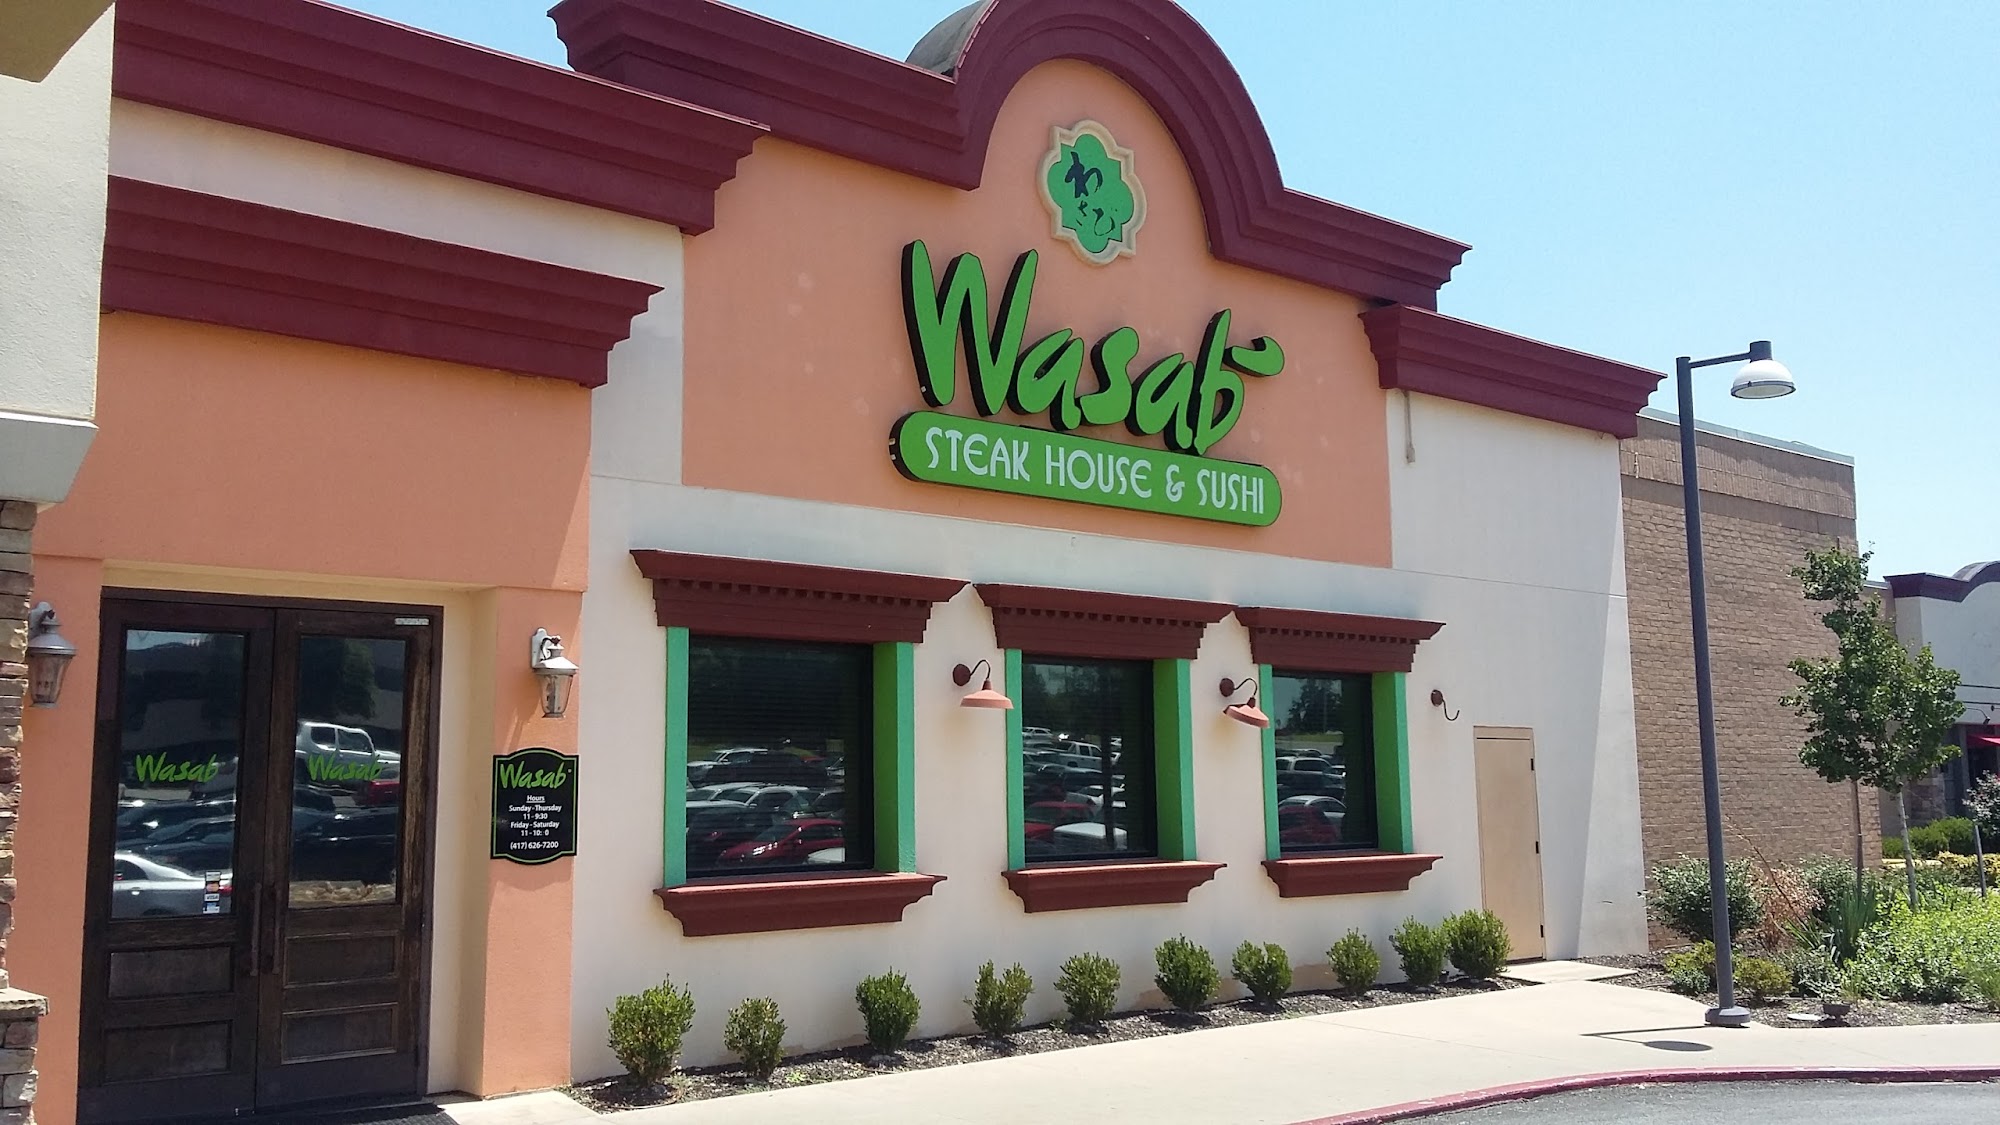 Wasab Steak House & Sushi